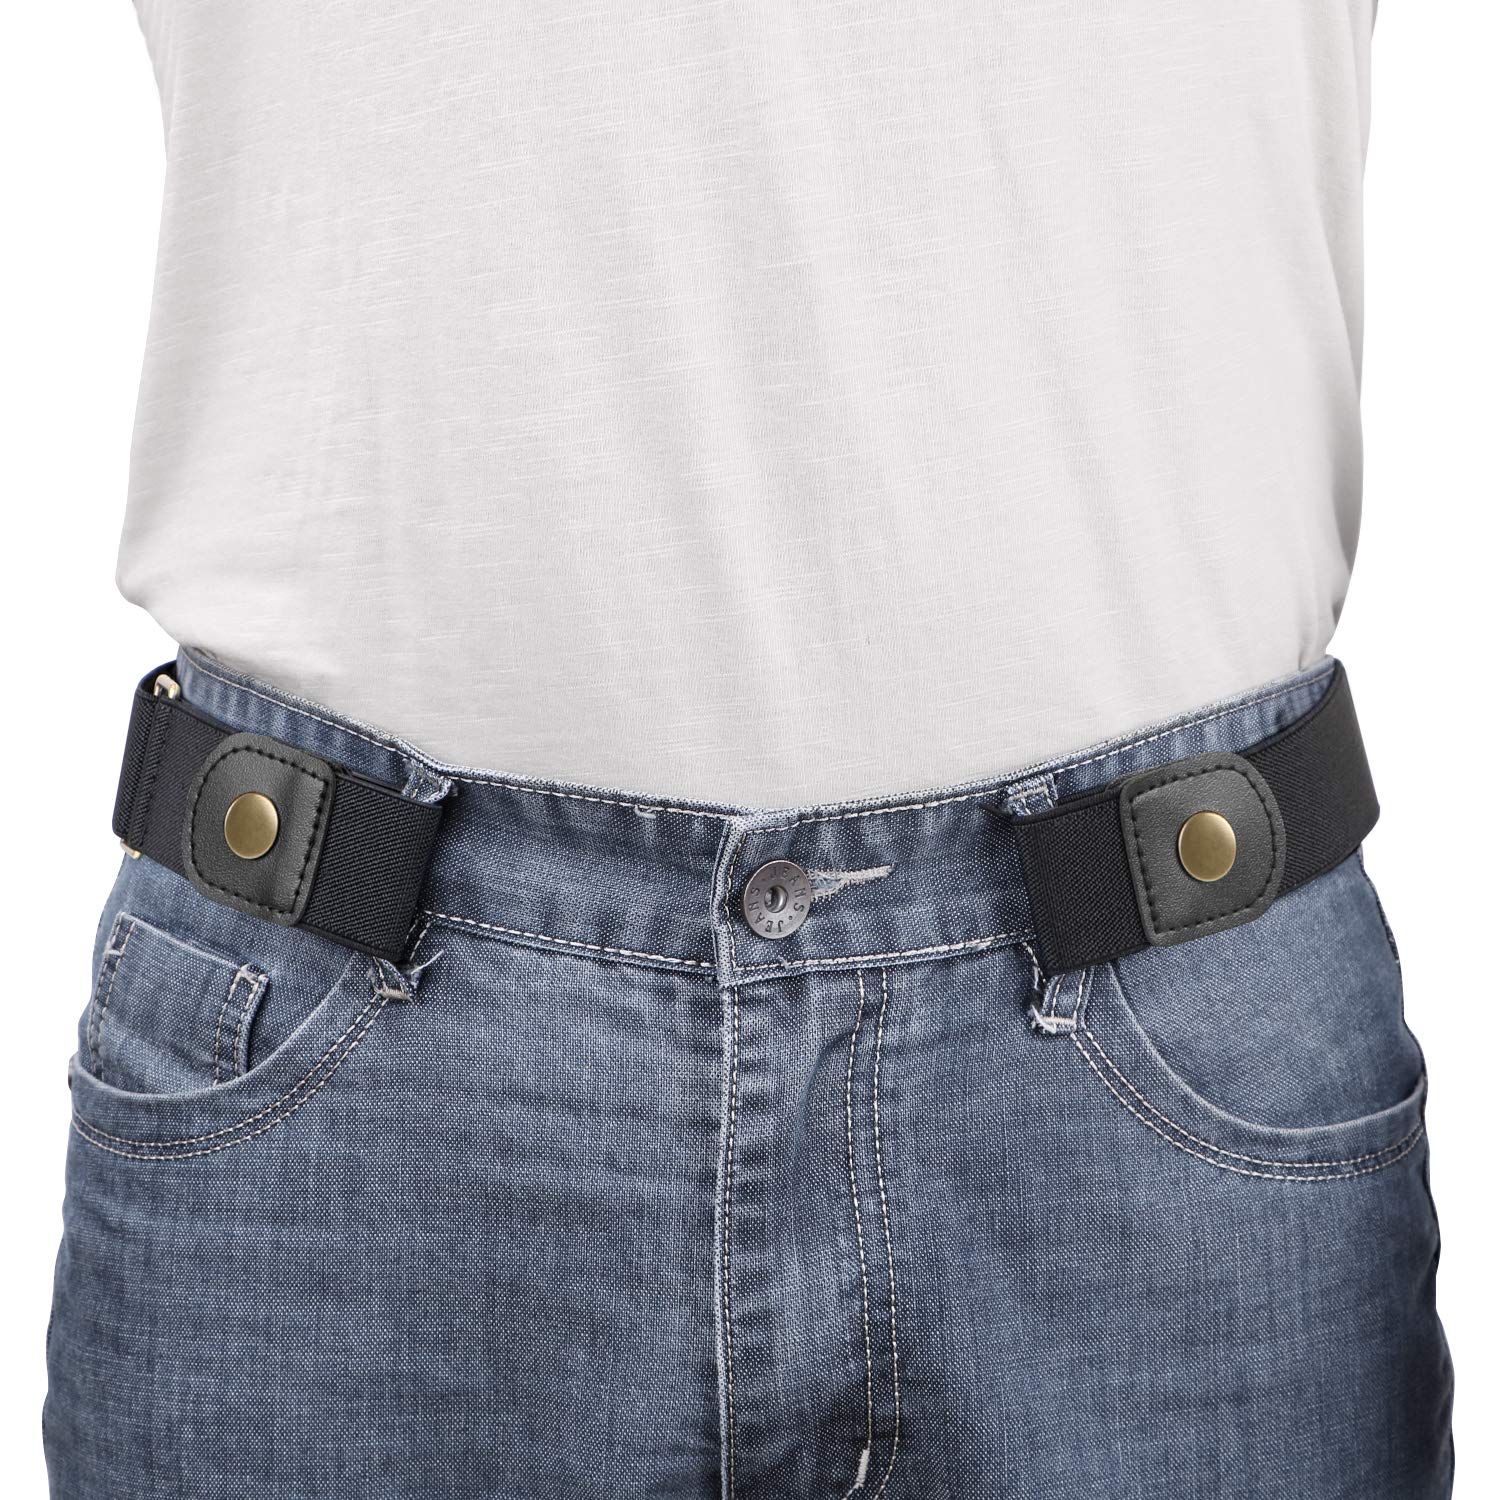 1pc Men's Buckleless Belt Jeans No Buckle Stretch Belt | Shop Now For ...